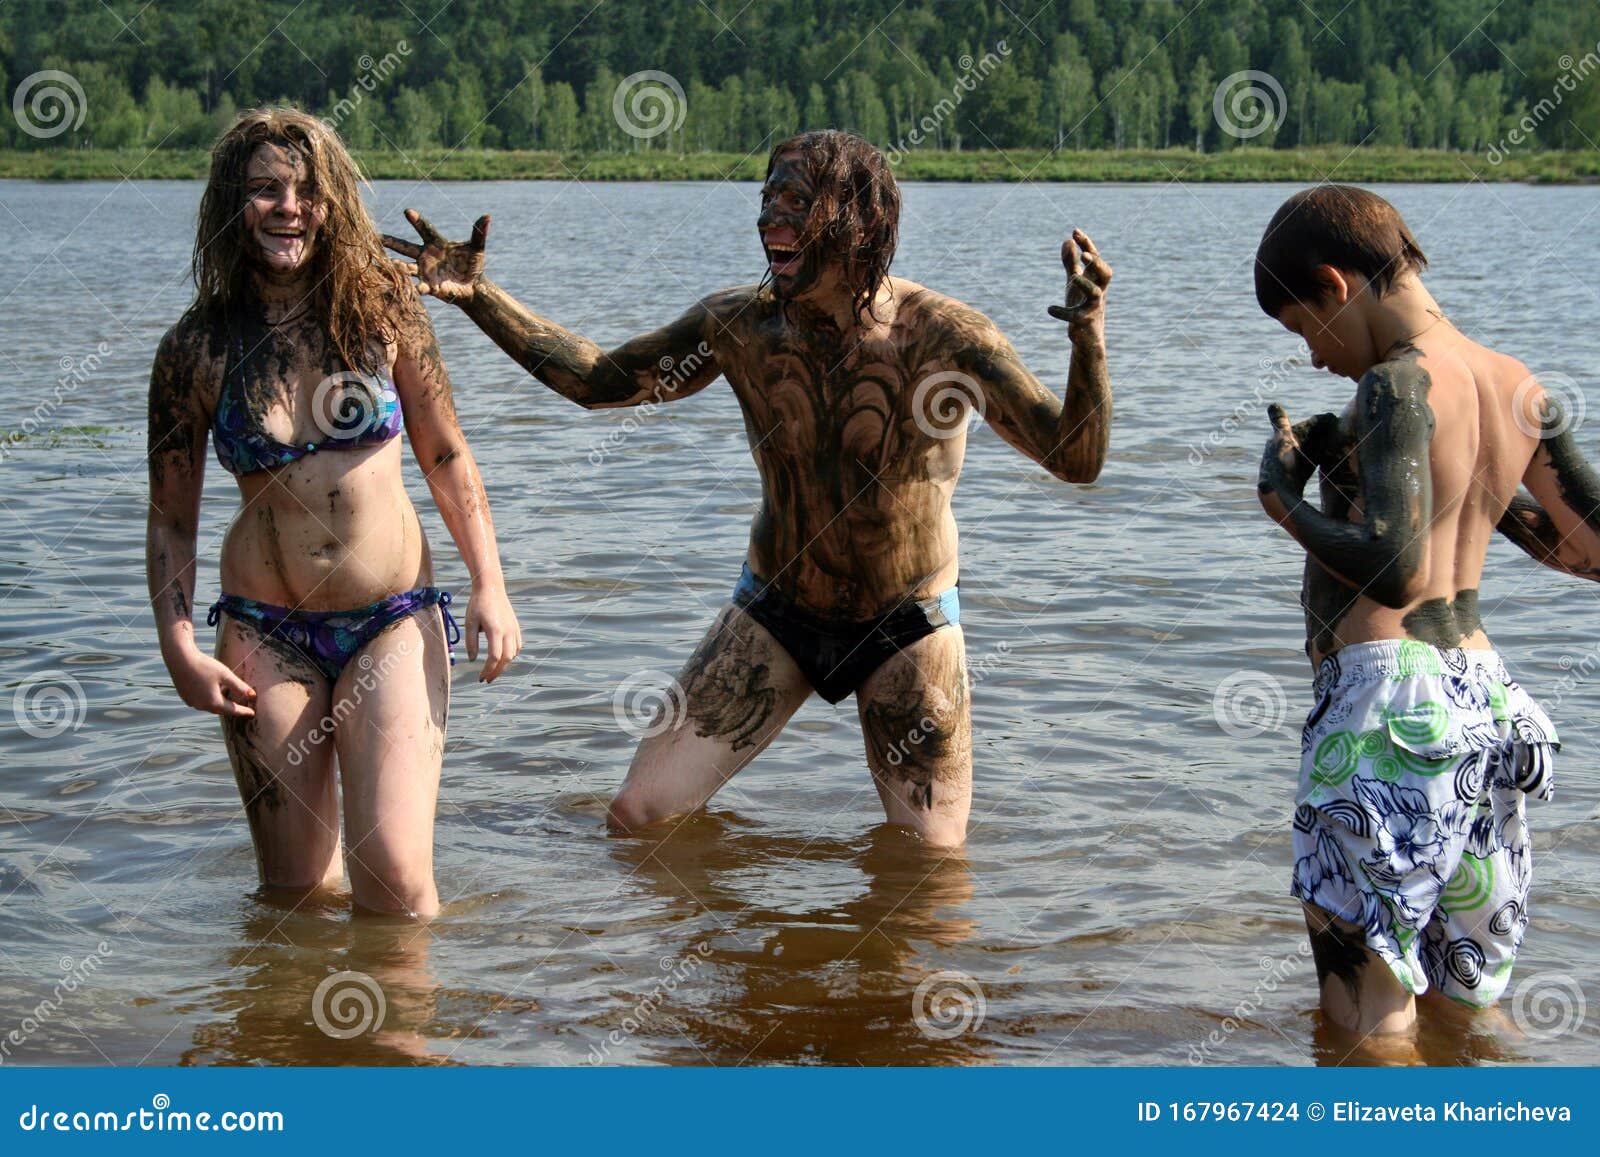 Best of Russian nudist families